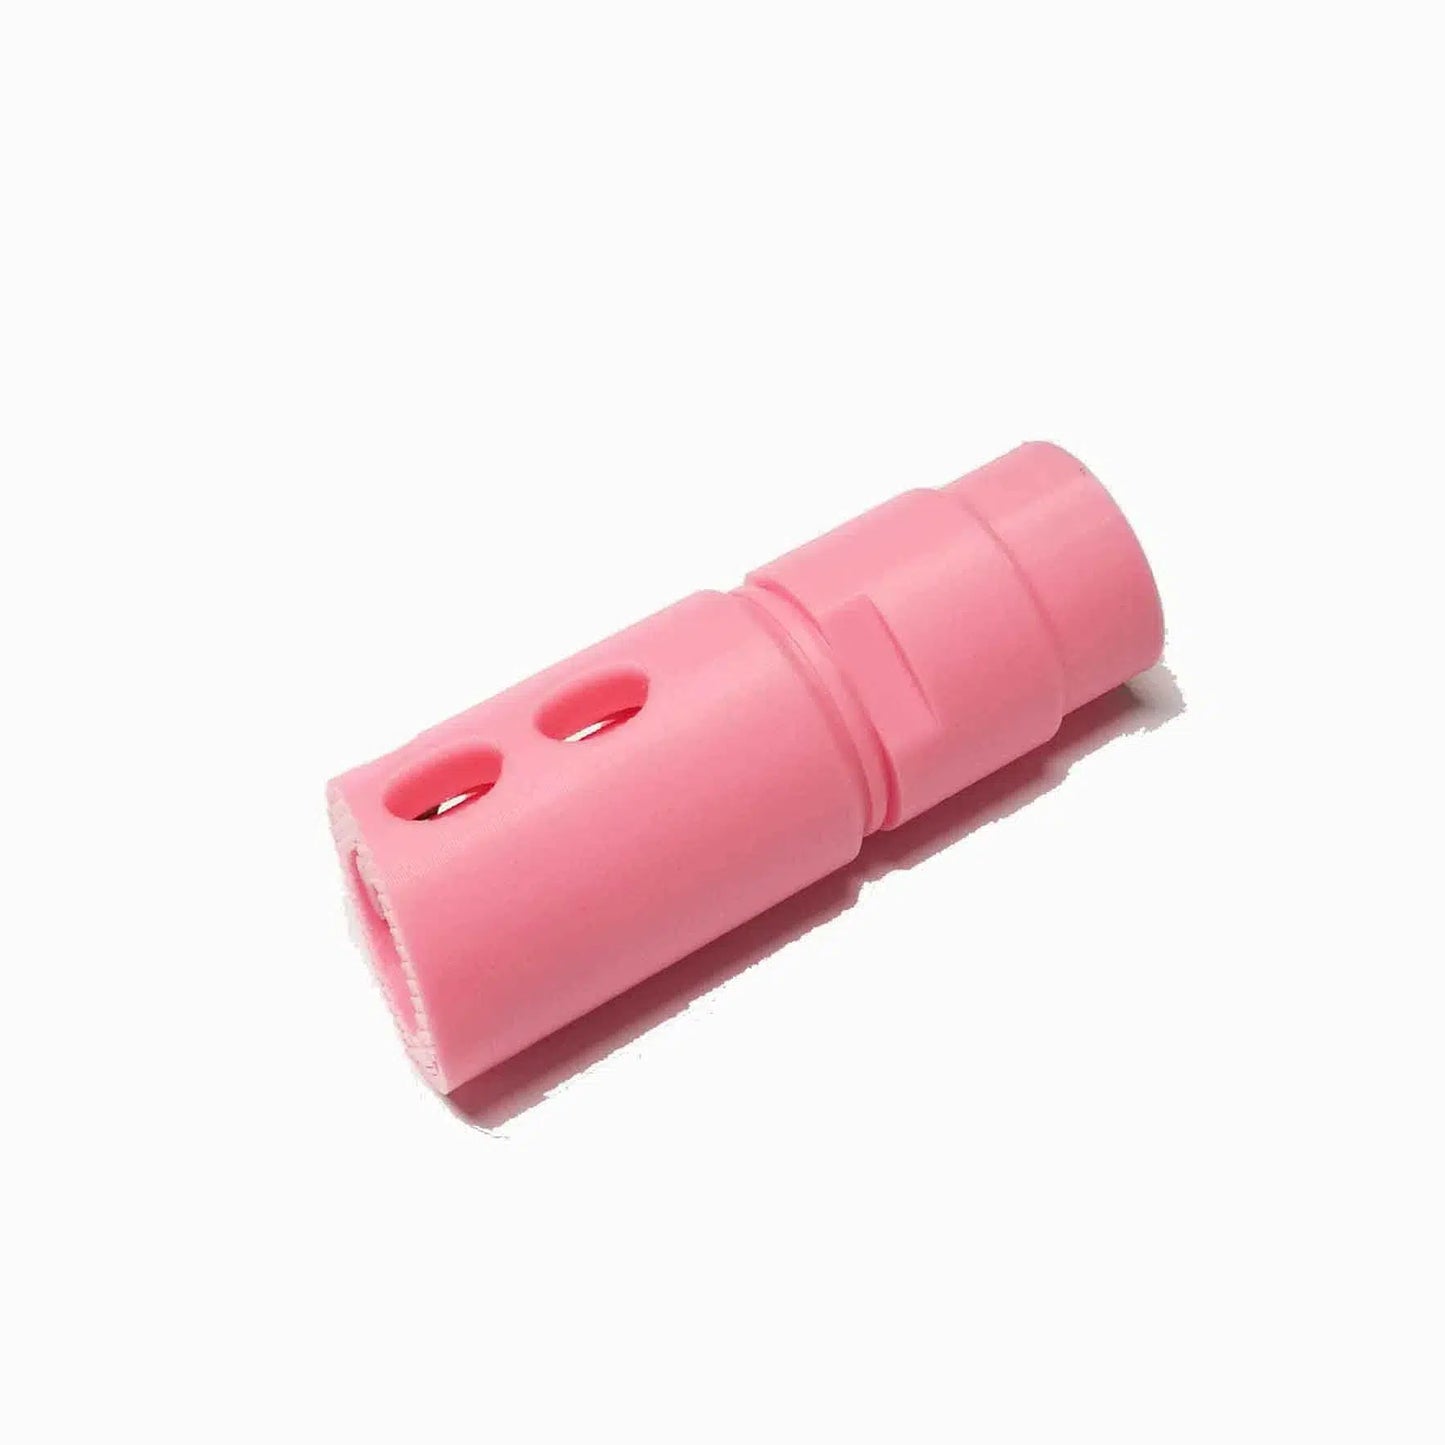 BF Pink P90 Gel Blaster V3-m416gelblaster-hop up-m416gelblaster